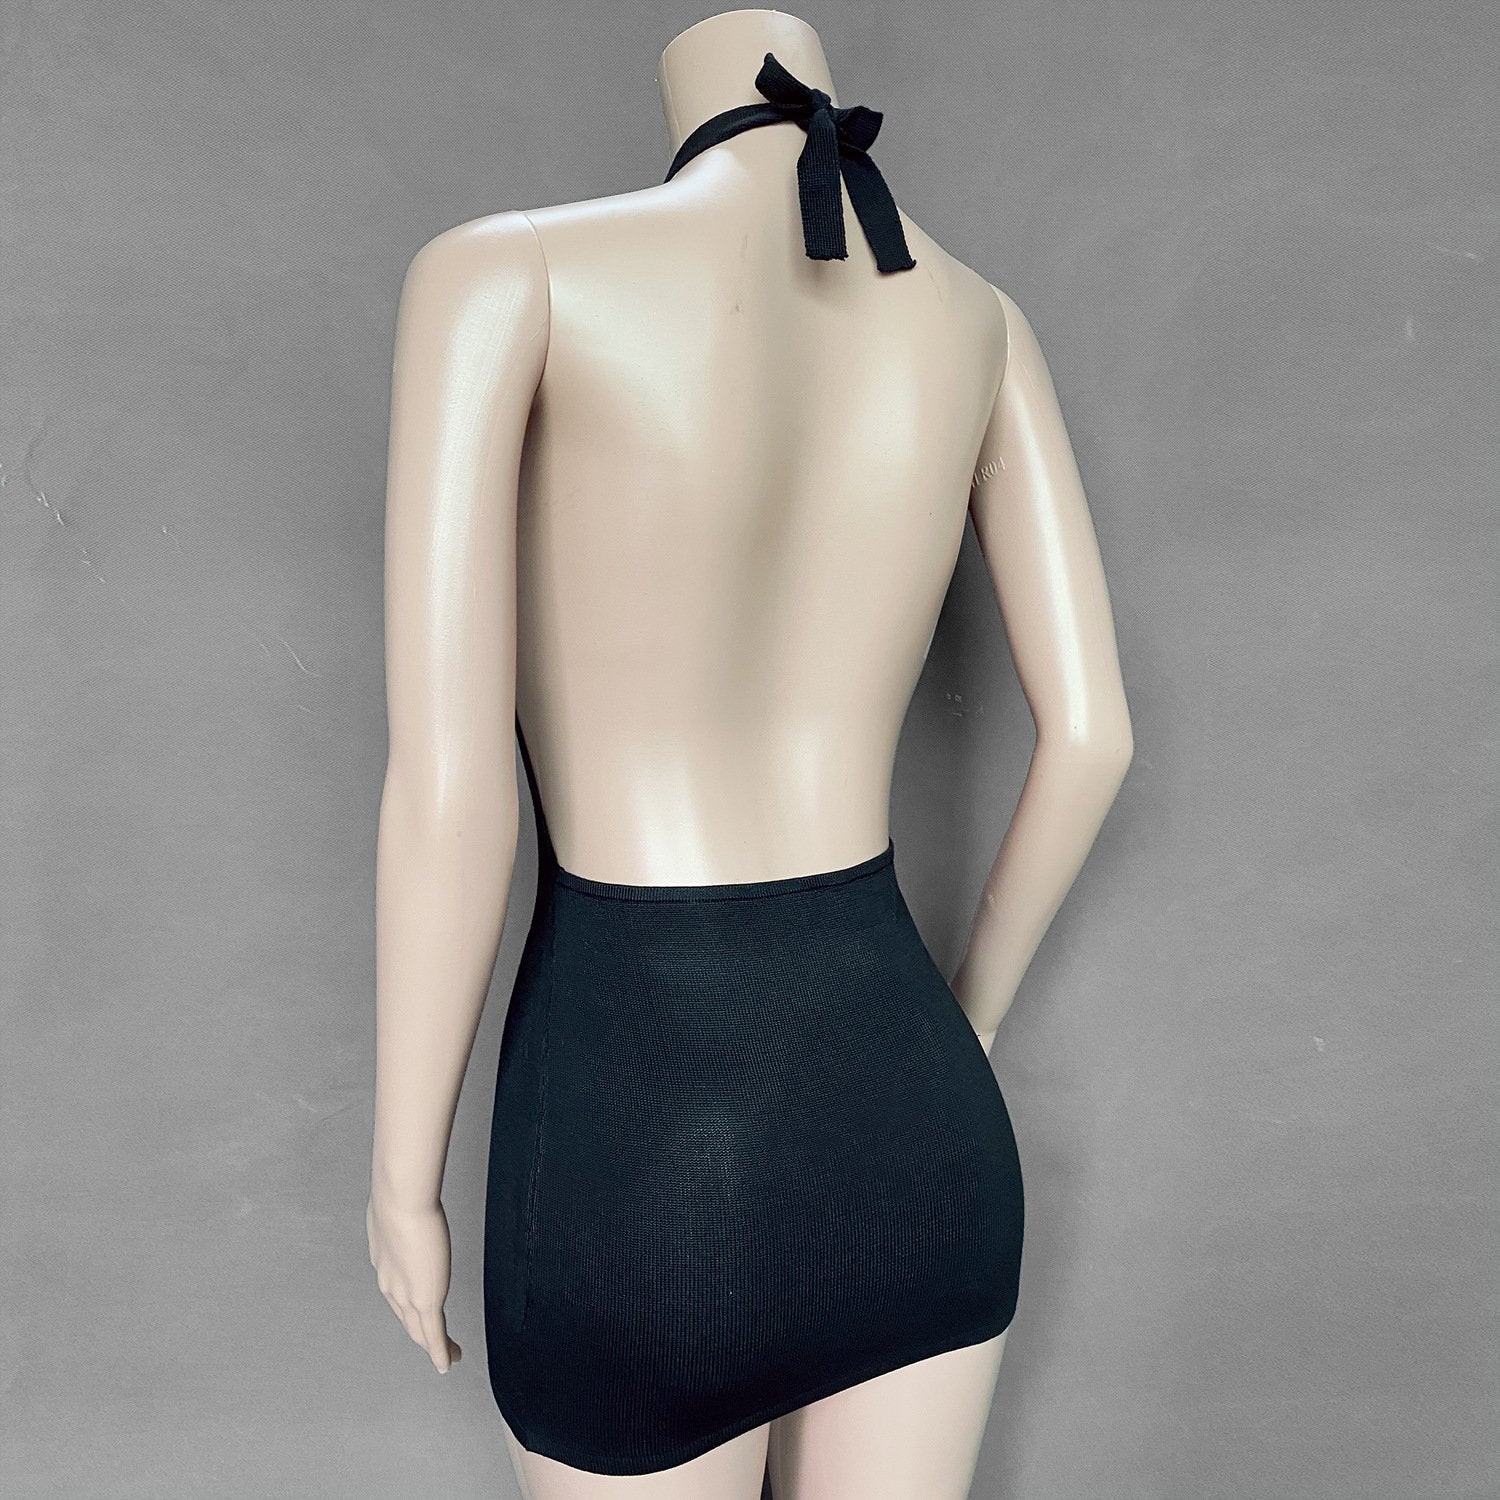 New Fashion Holiday Sheath Halter Backless Knitting Dresses-Sexy Dresses-Black-XS-Free Shipping at meselling99